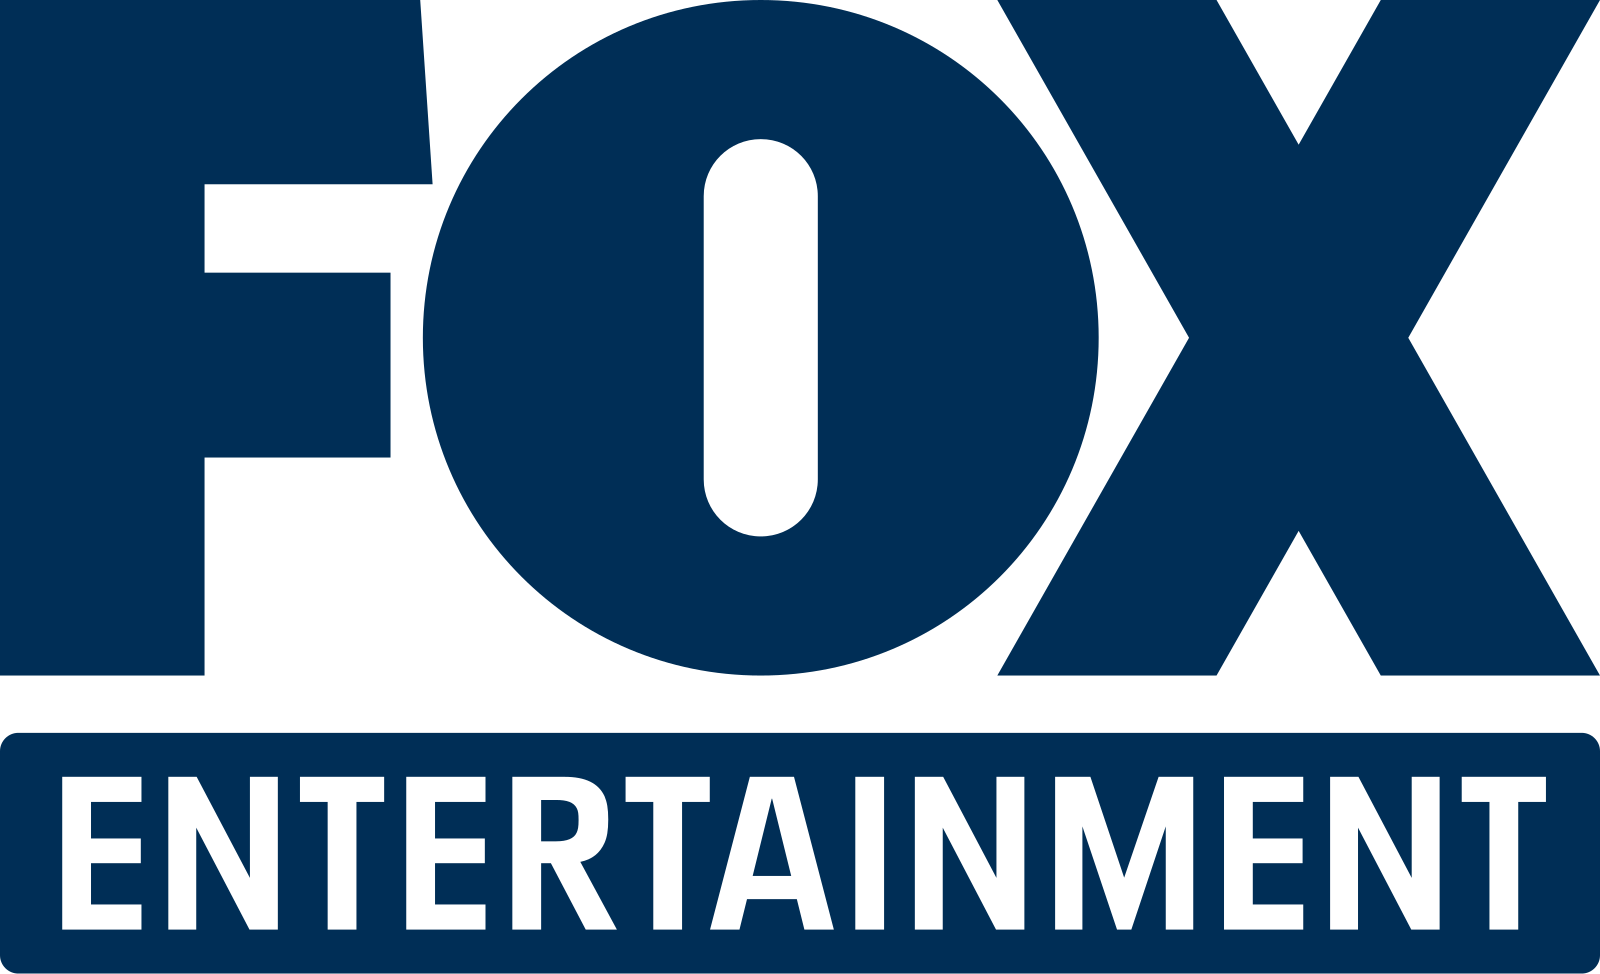 Fox Corporation. Fox Entertainment Group logo. Fox Broadcasting Company logo. Интертеймент. Fox entertainment